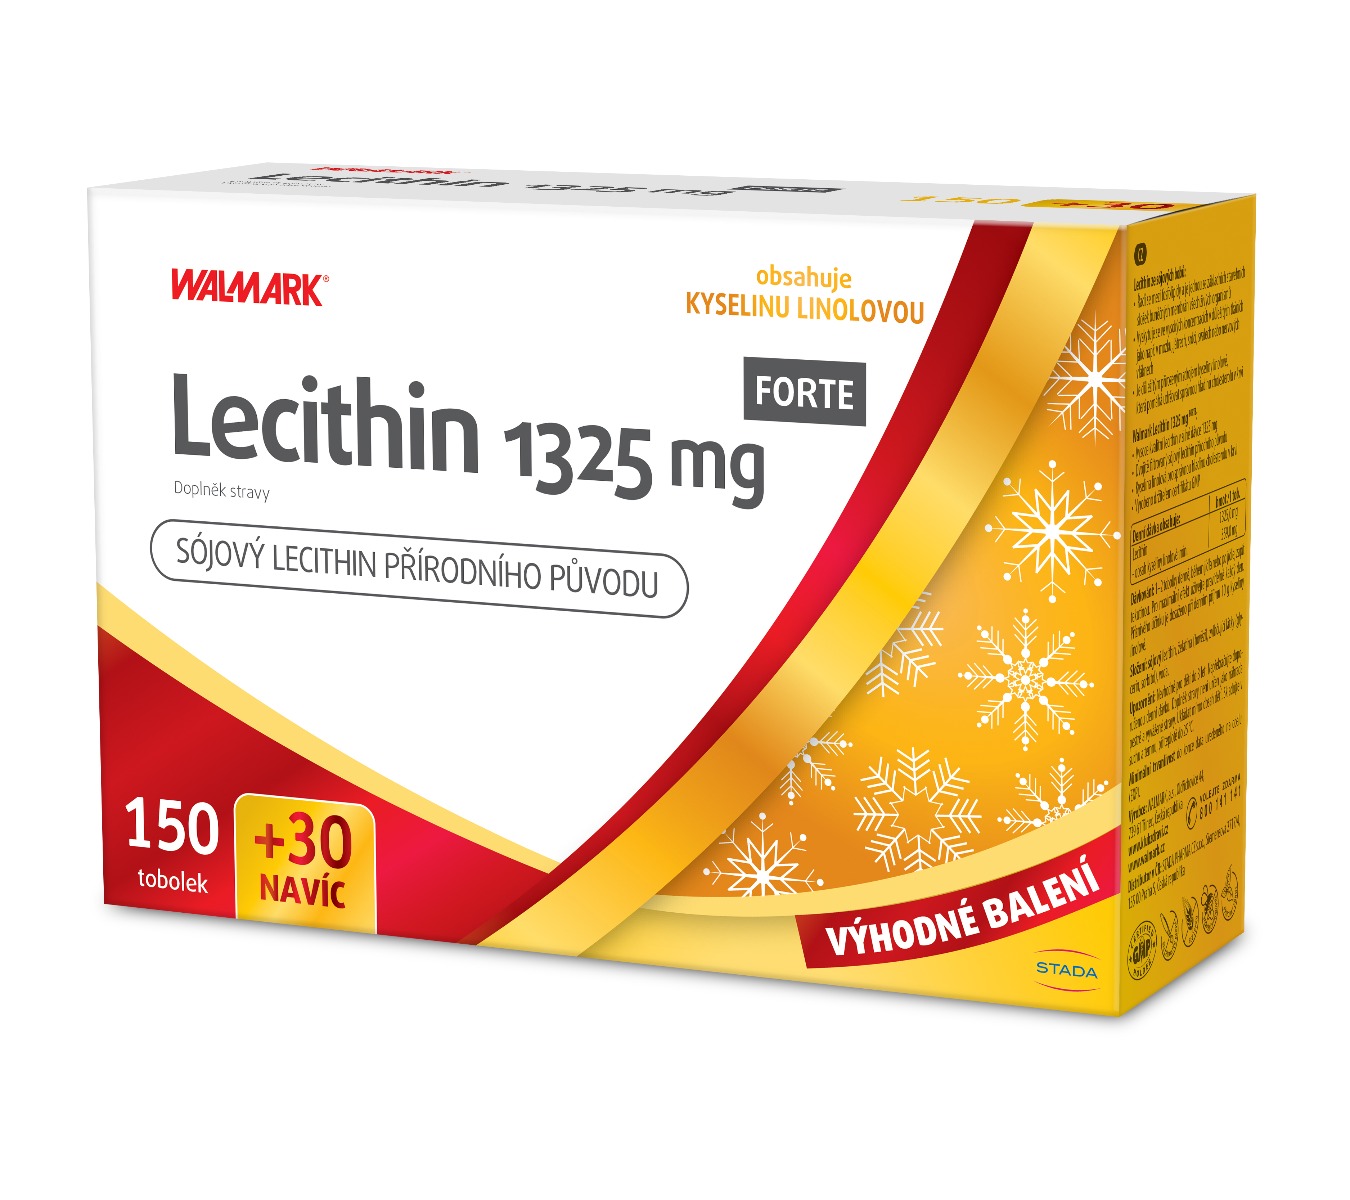 Walmark Lecithin Forte 1325 mg 120+60 tobolek Walmark